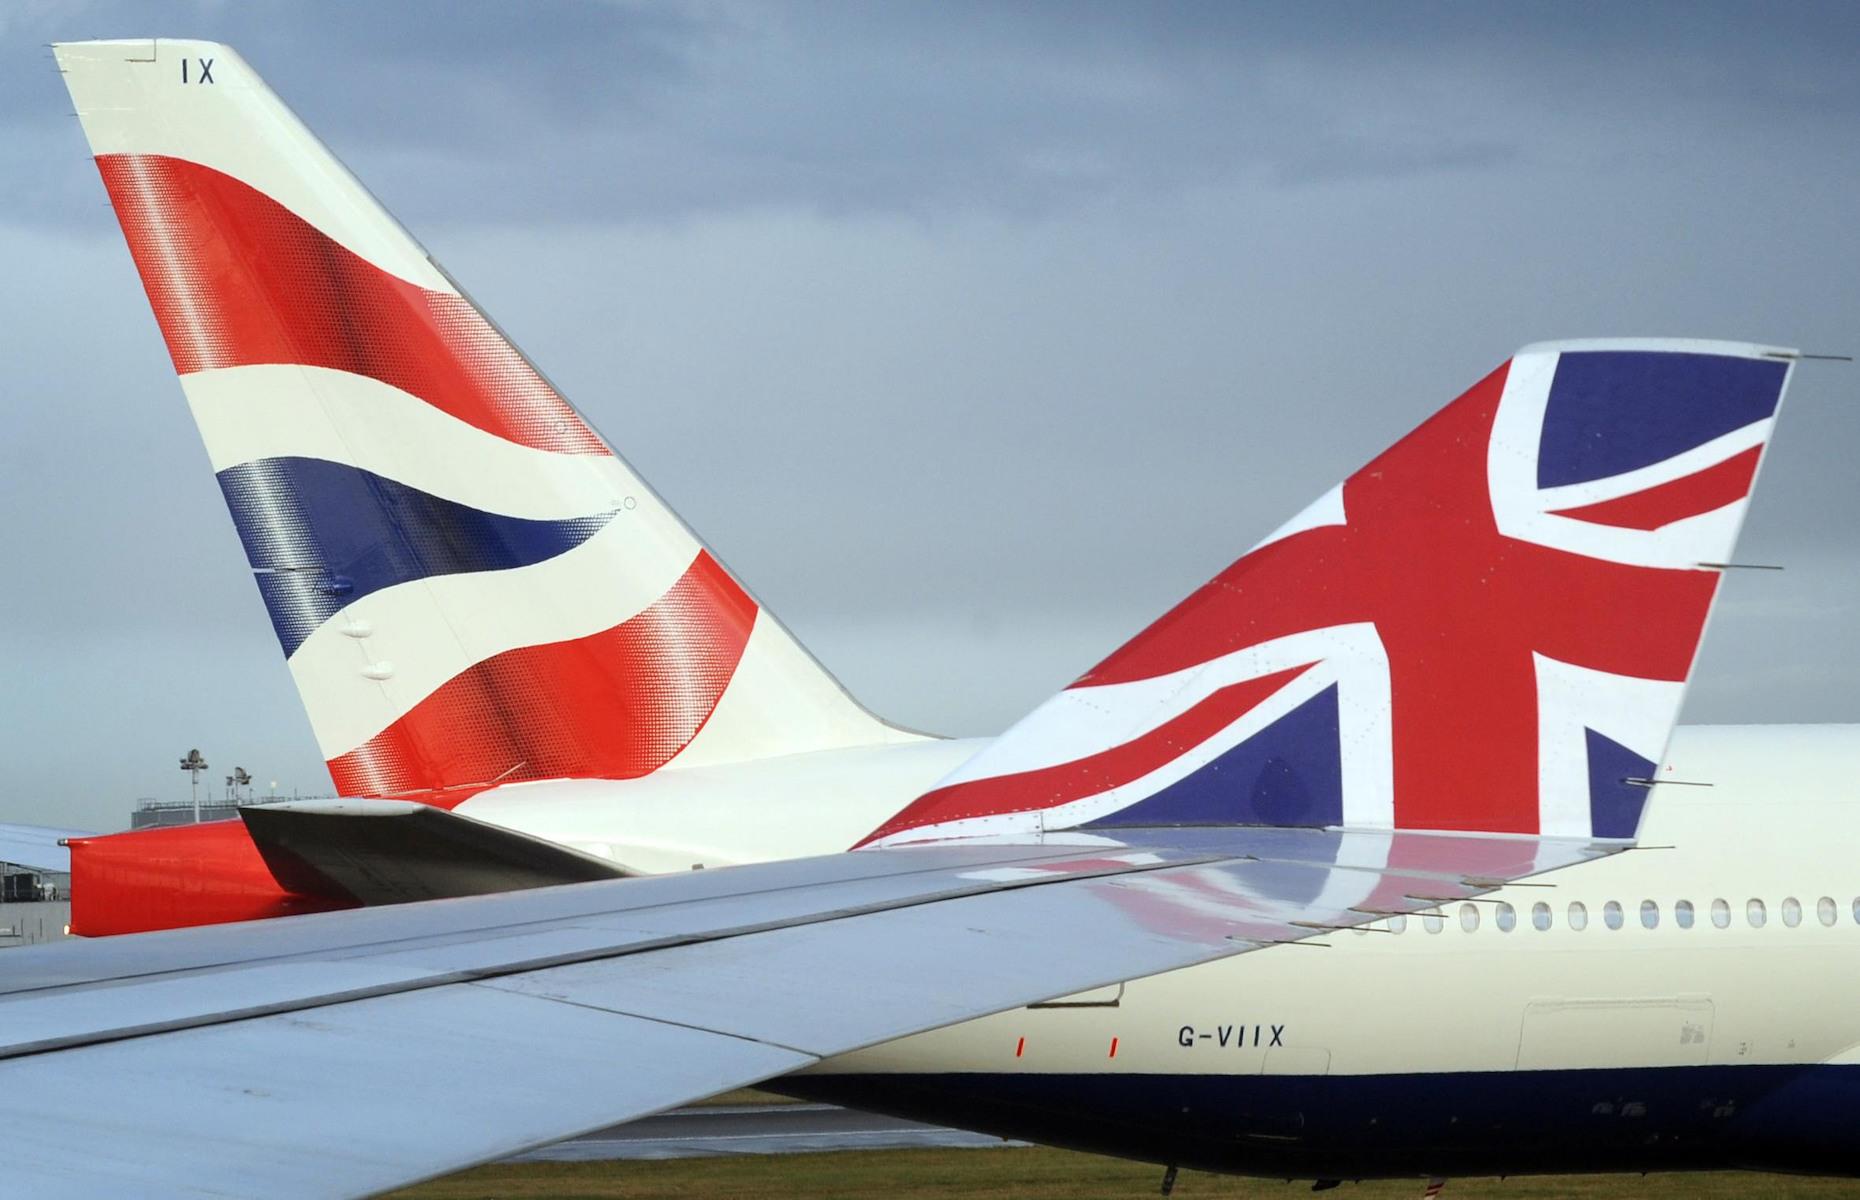 British Airways vs Virgin Atlantic